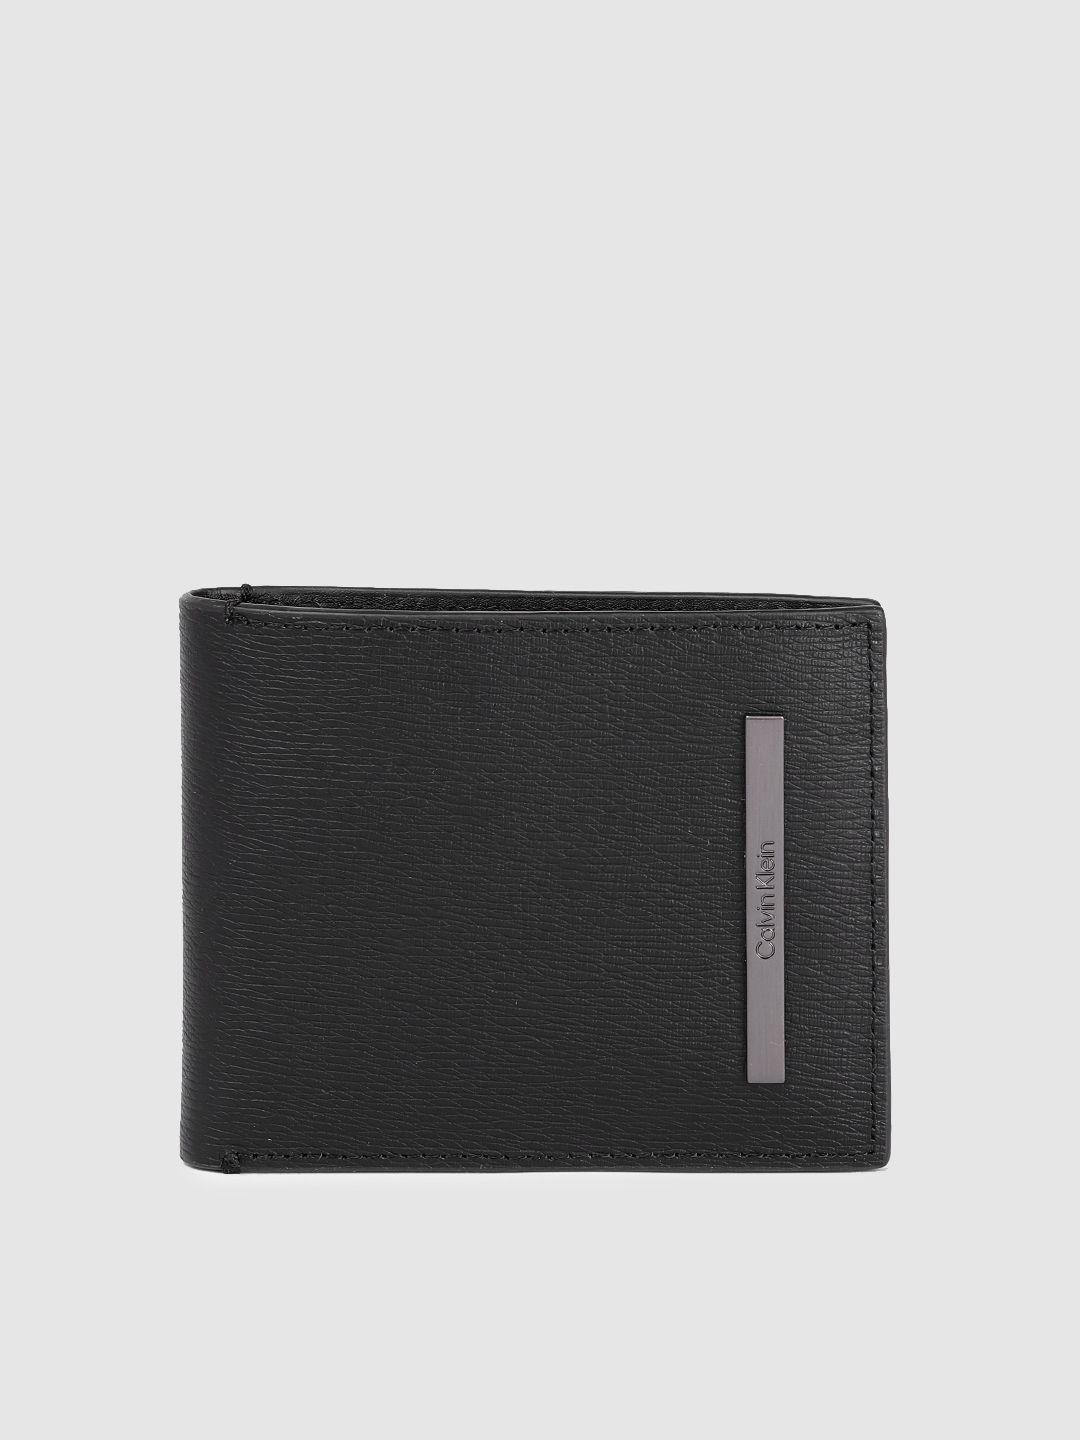 calvin klein men leather two fold wallet